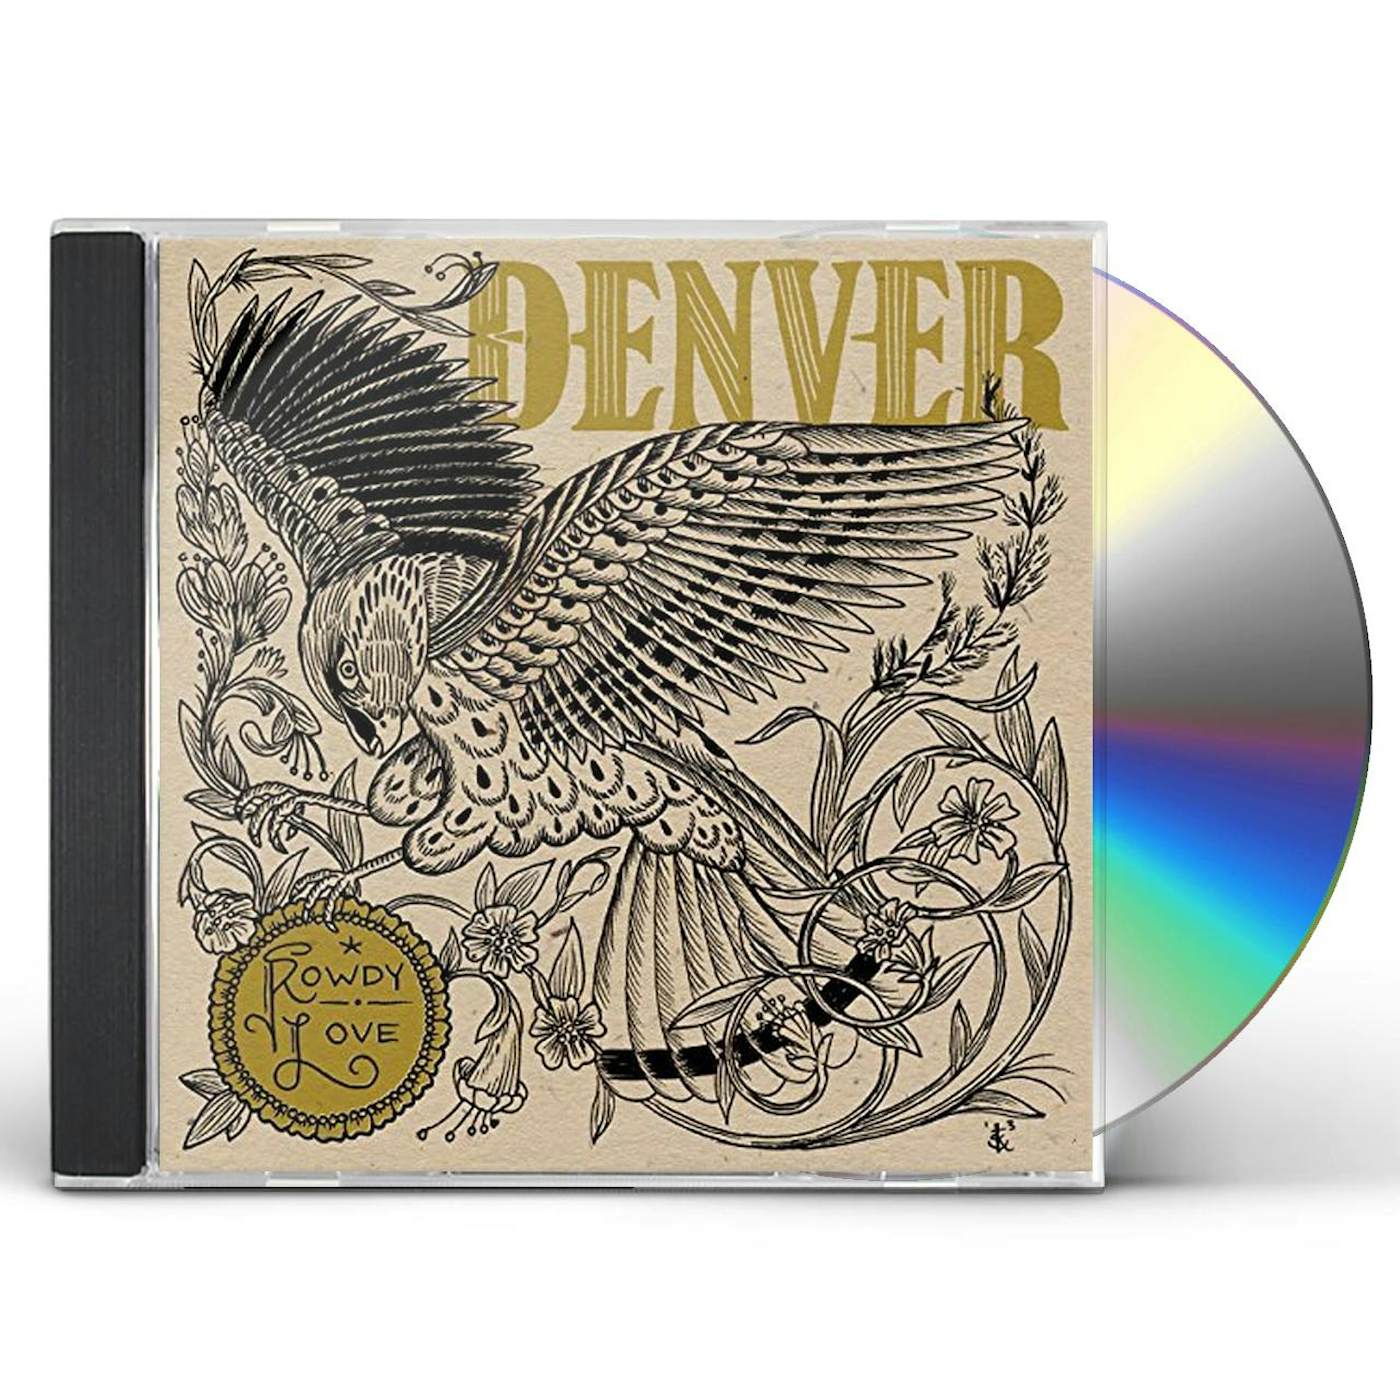 Denver ROWDY LOVE CD